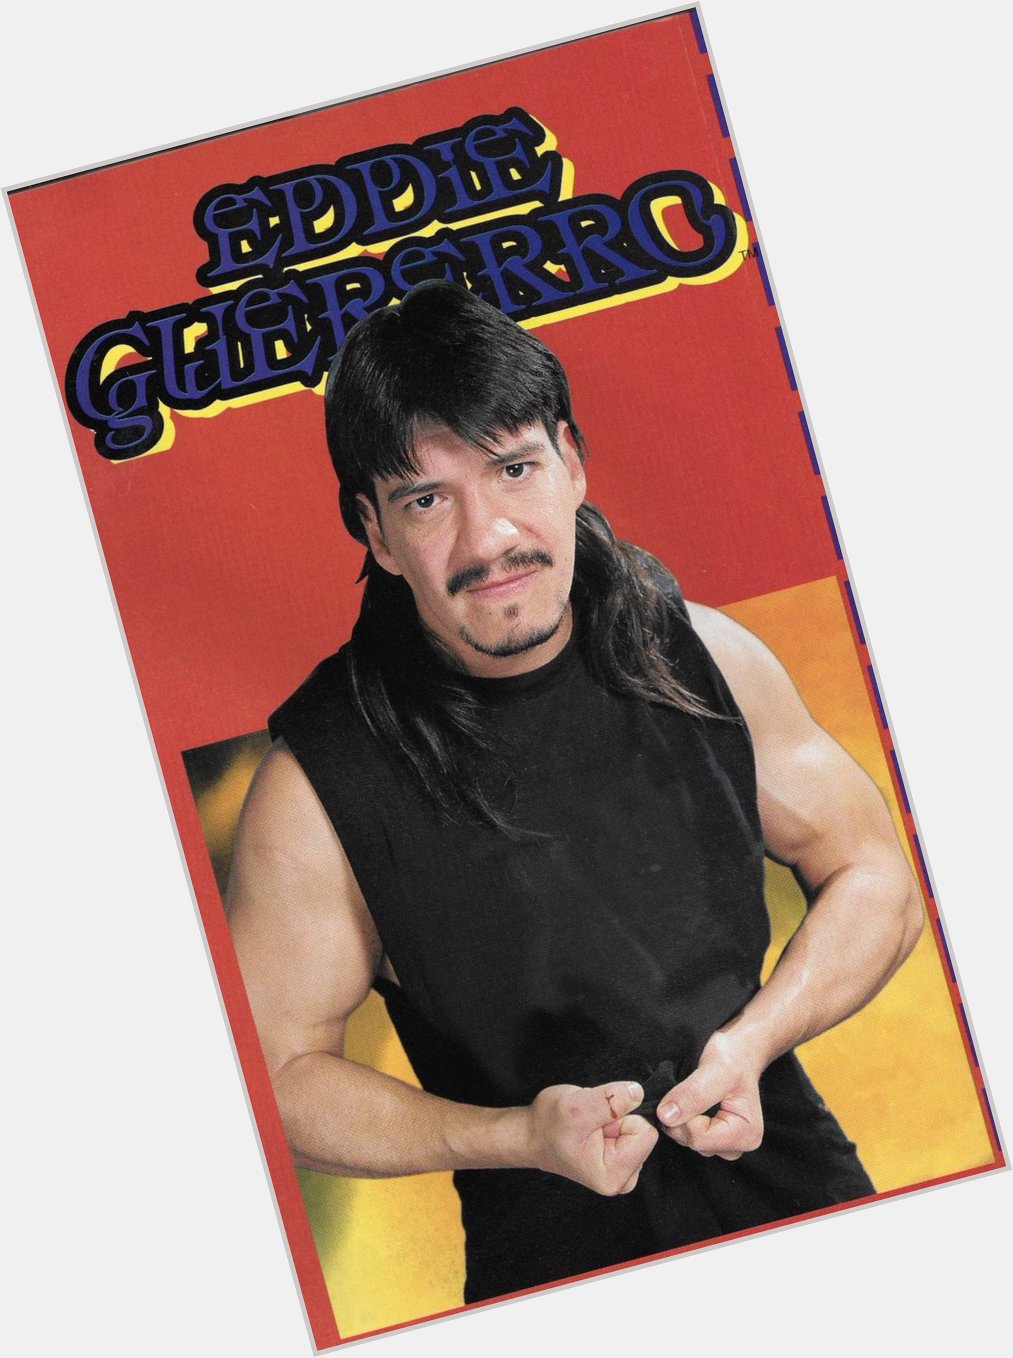 Happy Birthday Eddie Guerrero! 